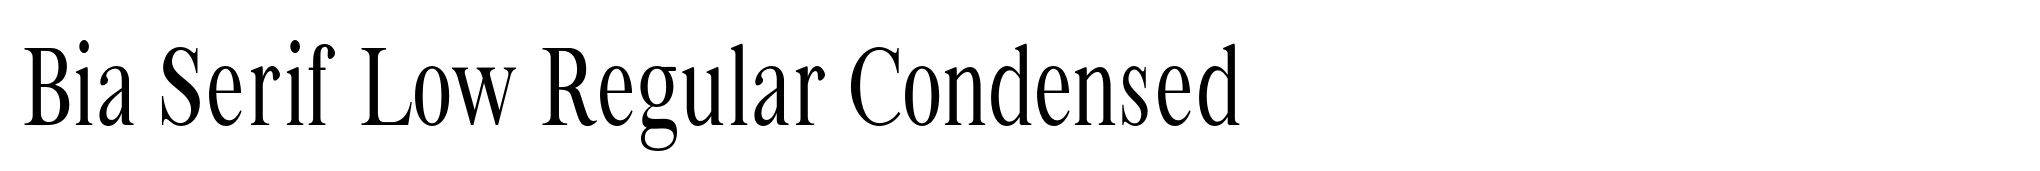 Bia Serif Low Regular Condensed image